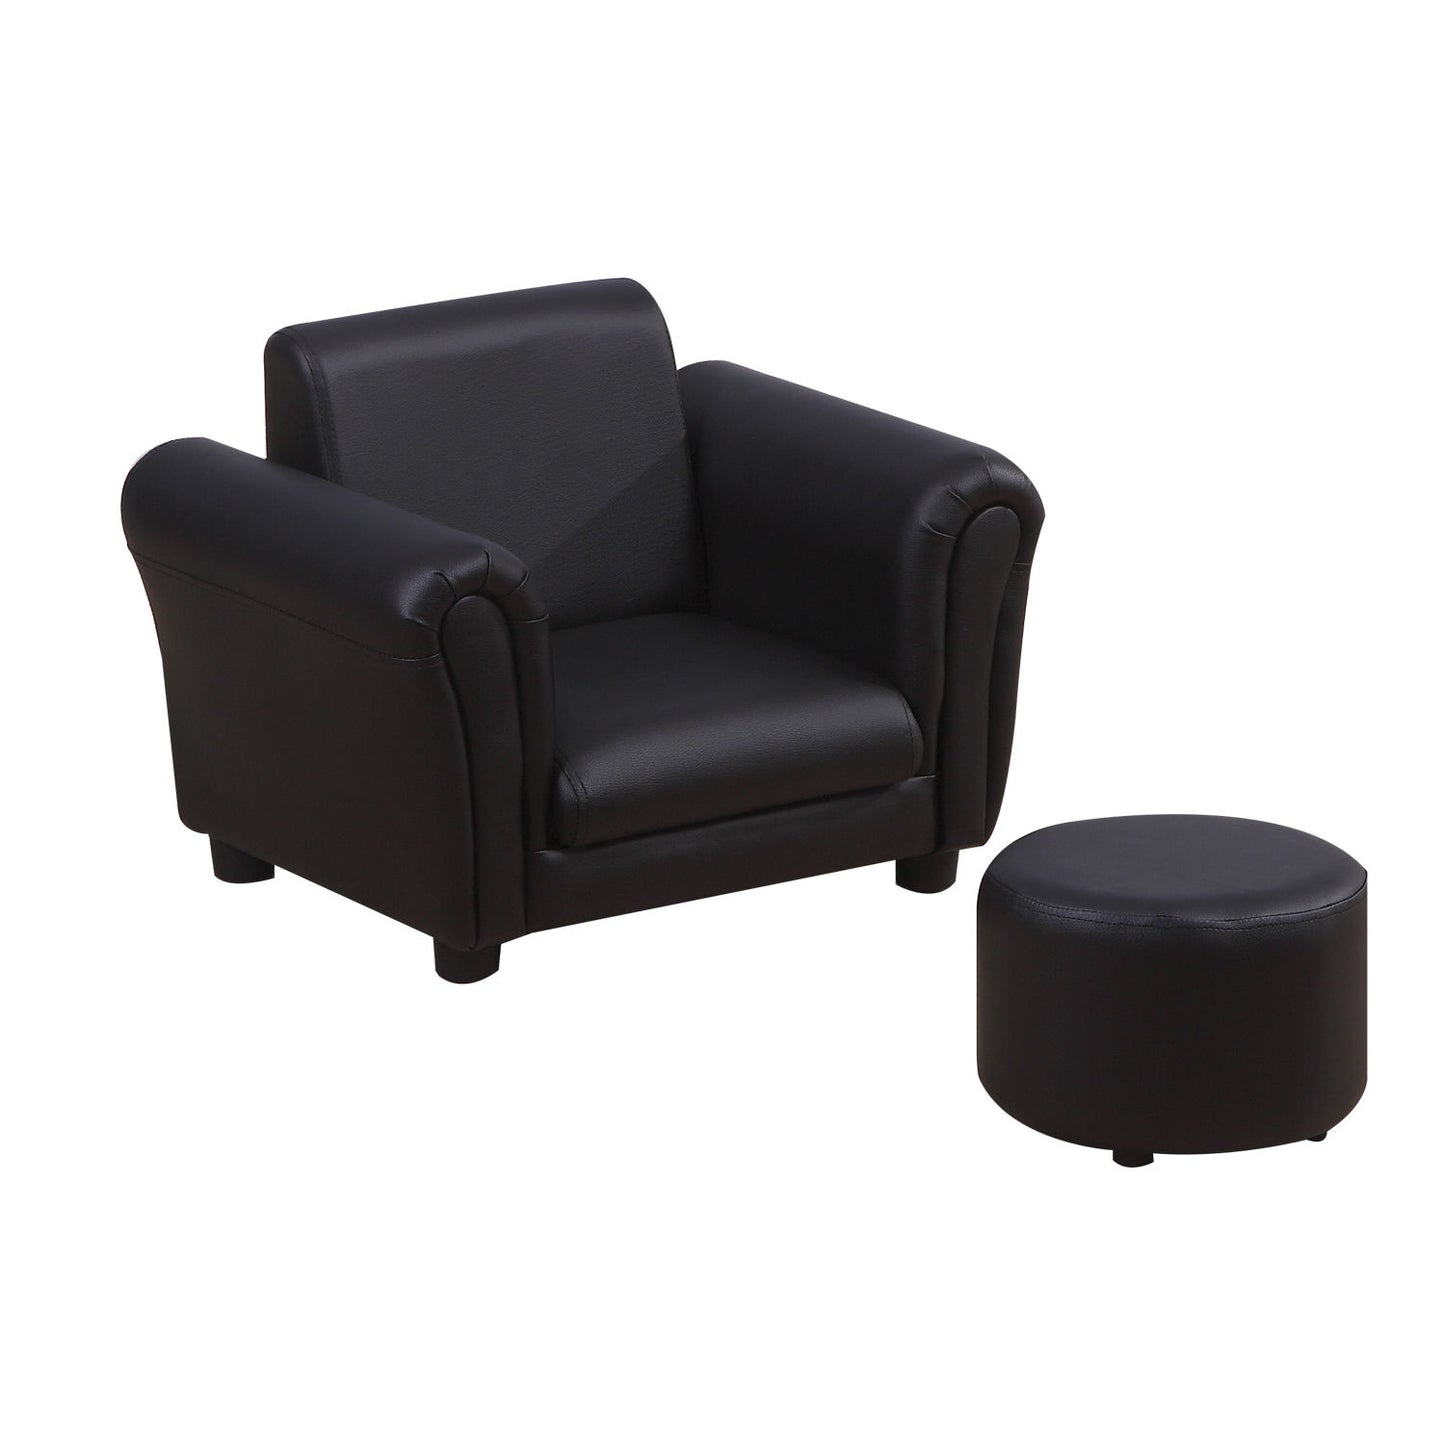 HOMCOM Children's PVC Single Seater Armchair with Footstool Black